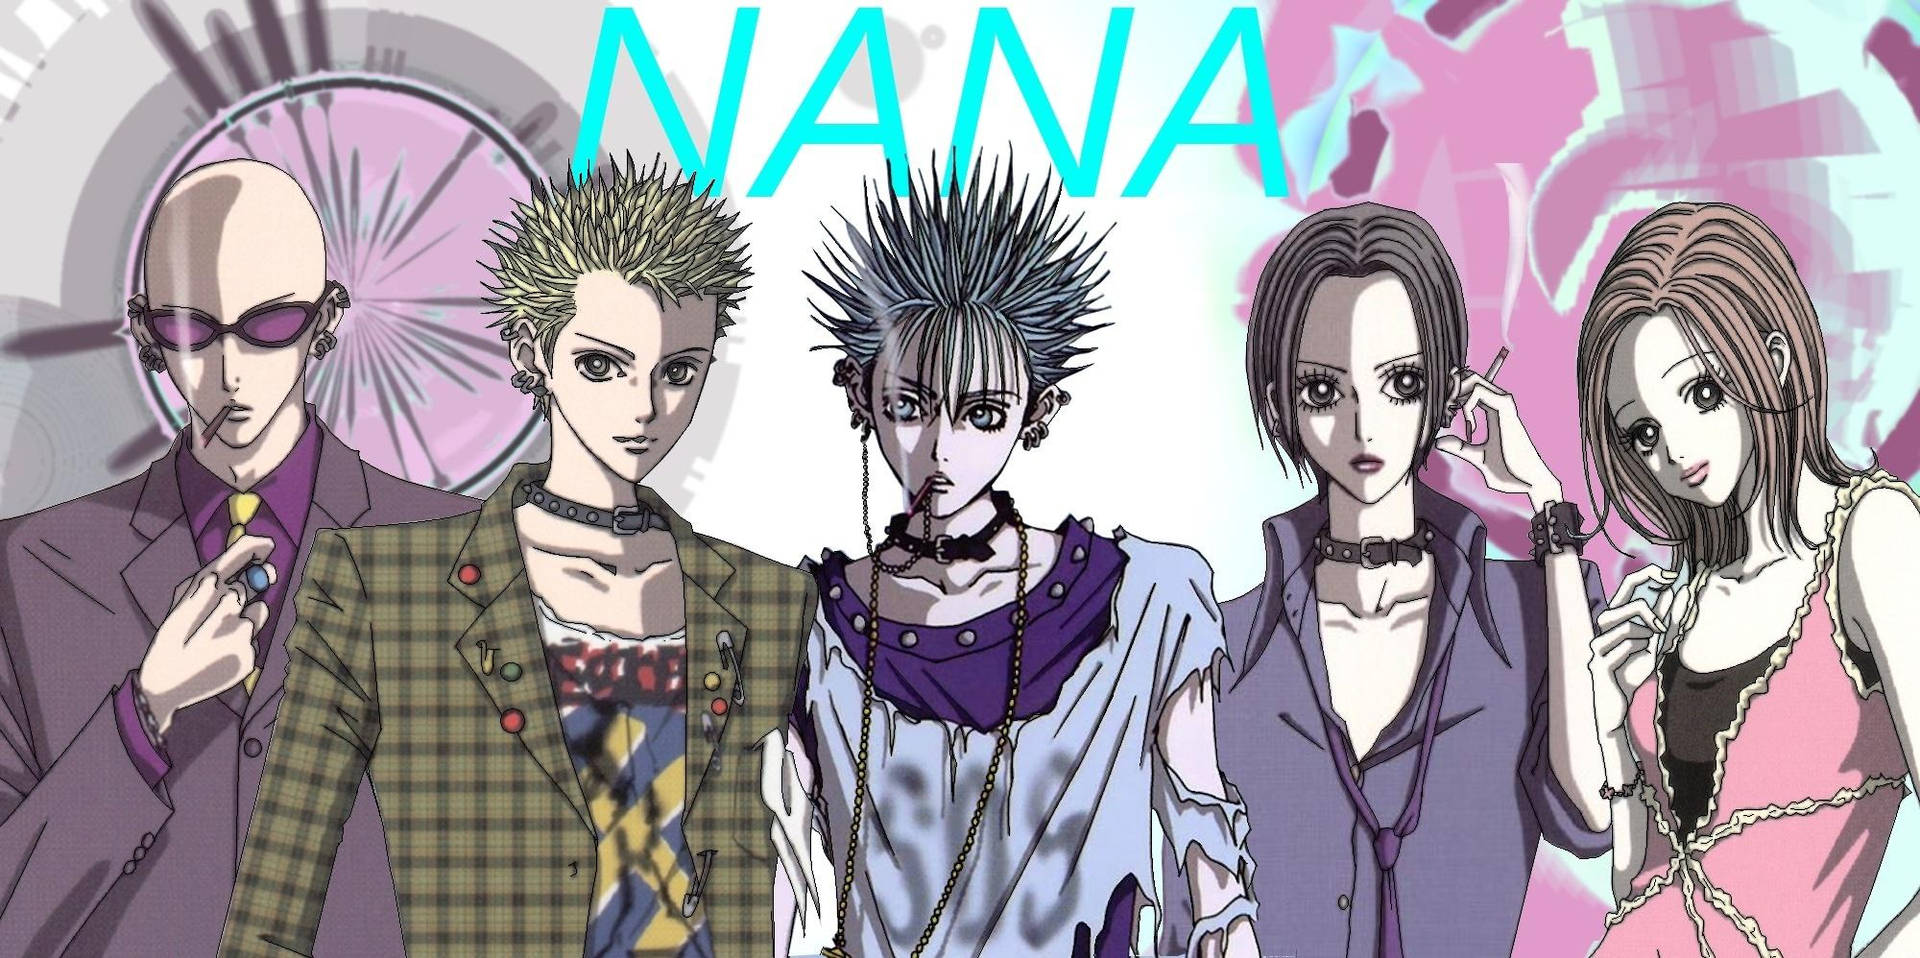 NANA characters by xevilxkittyx on DeviantArt